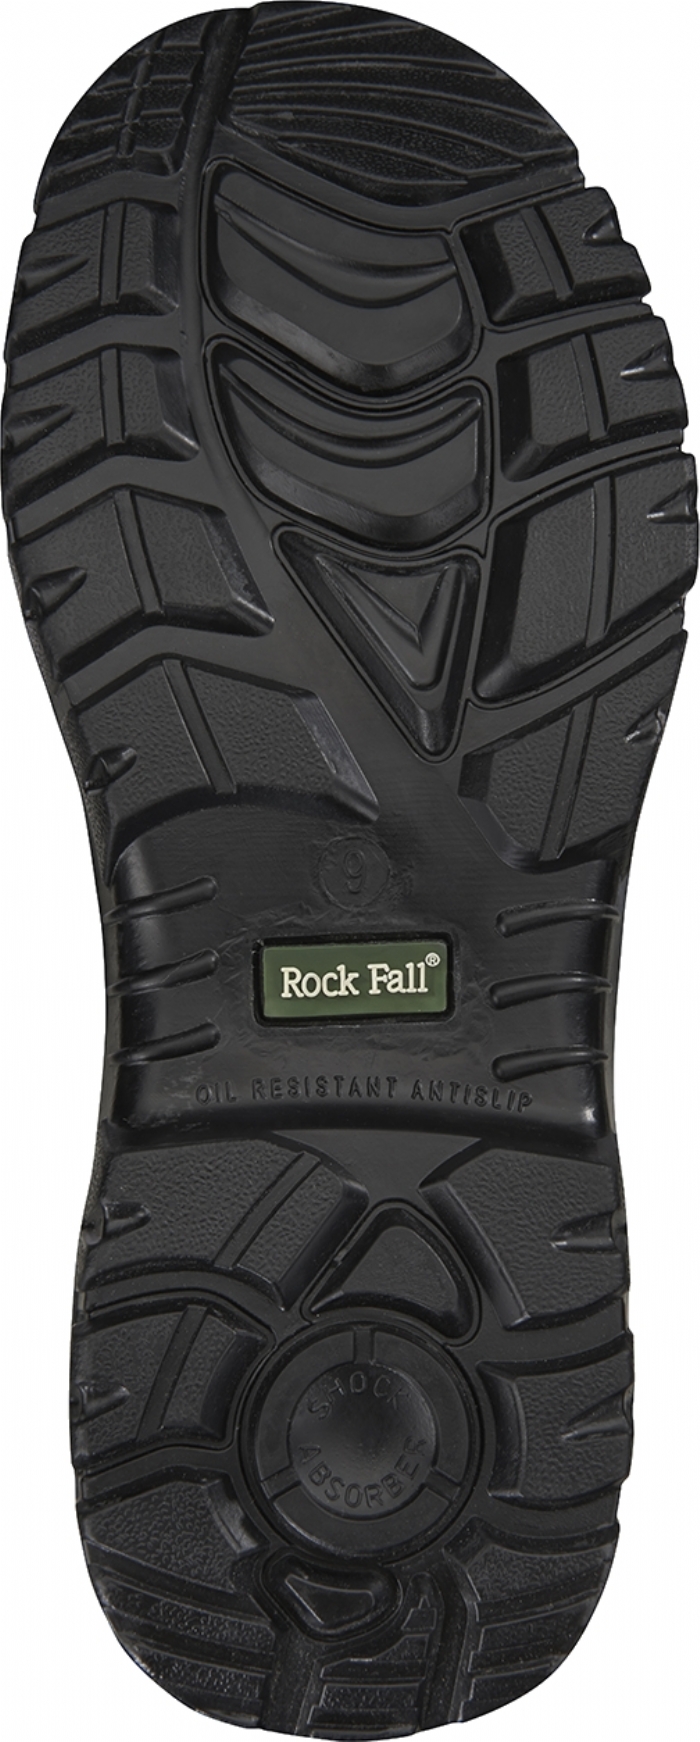 Rockfall Melantite RF333 High Leg Safety Boot